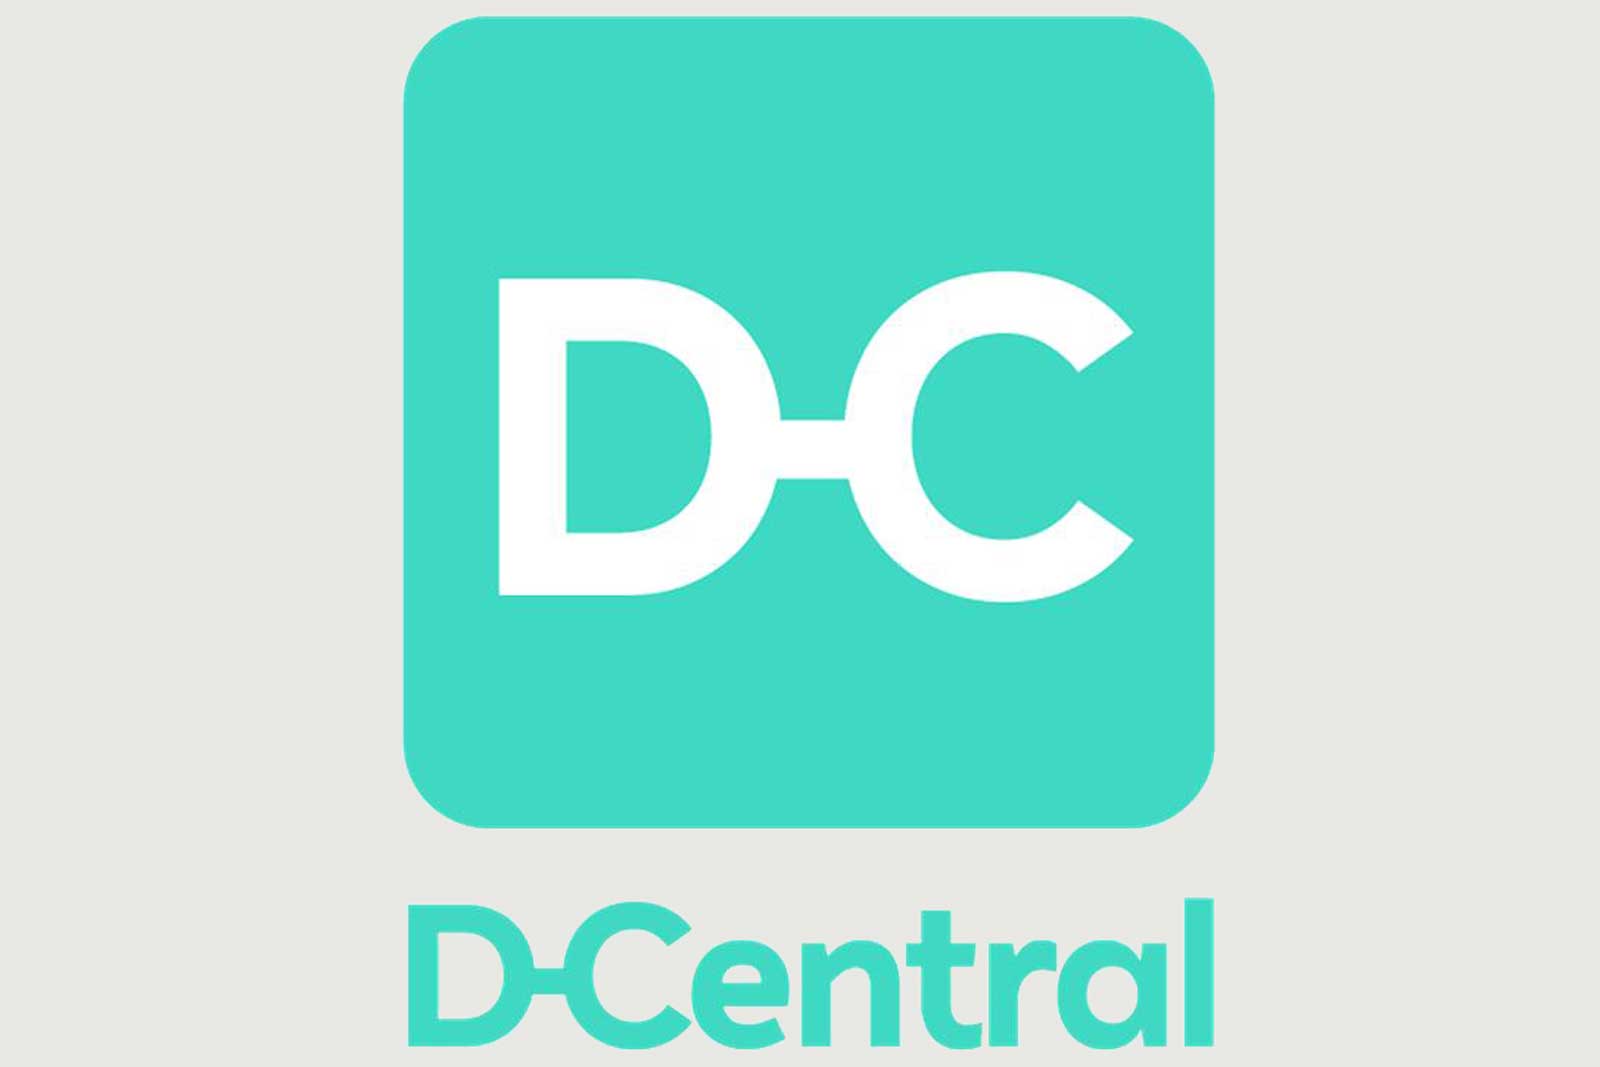 D-Central